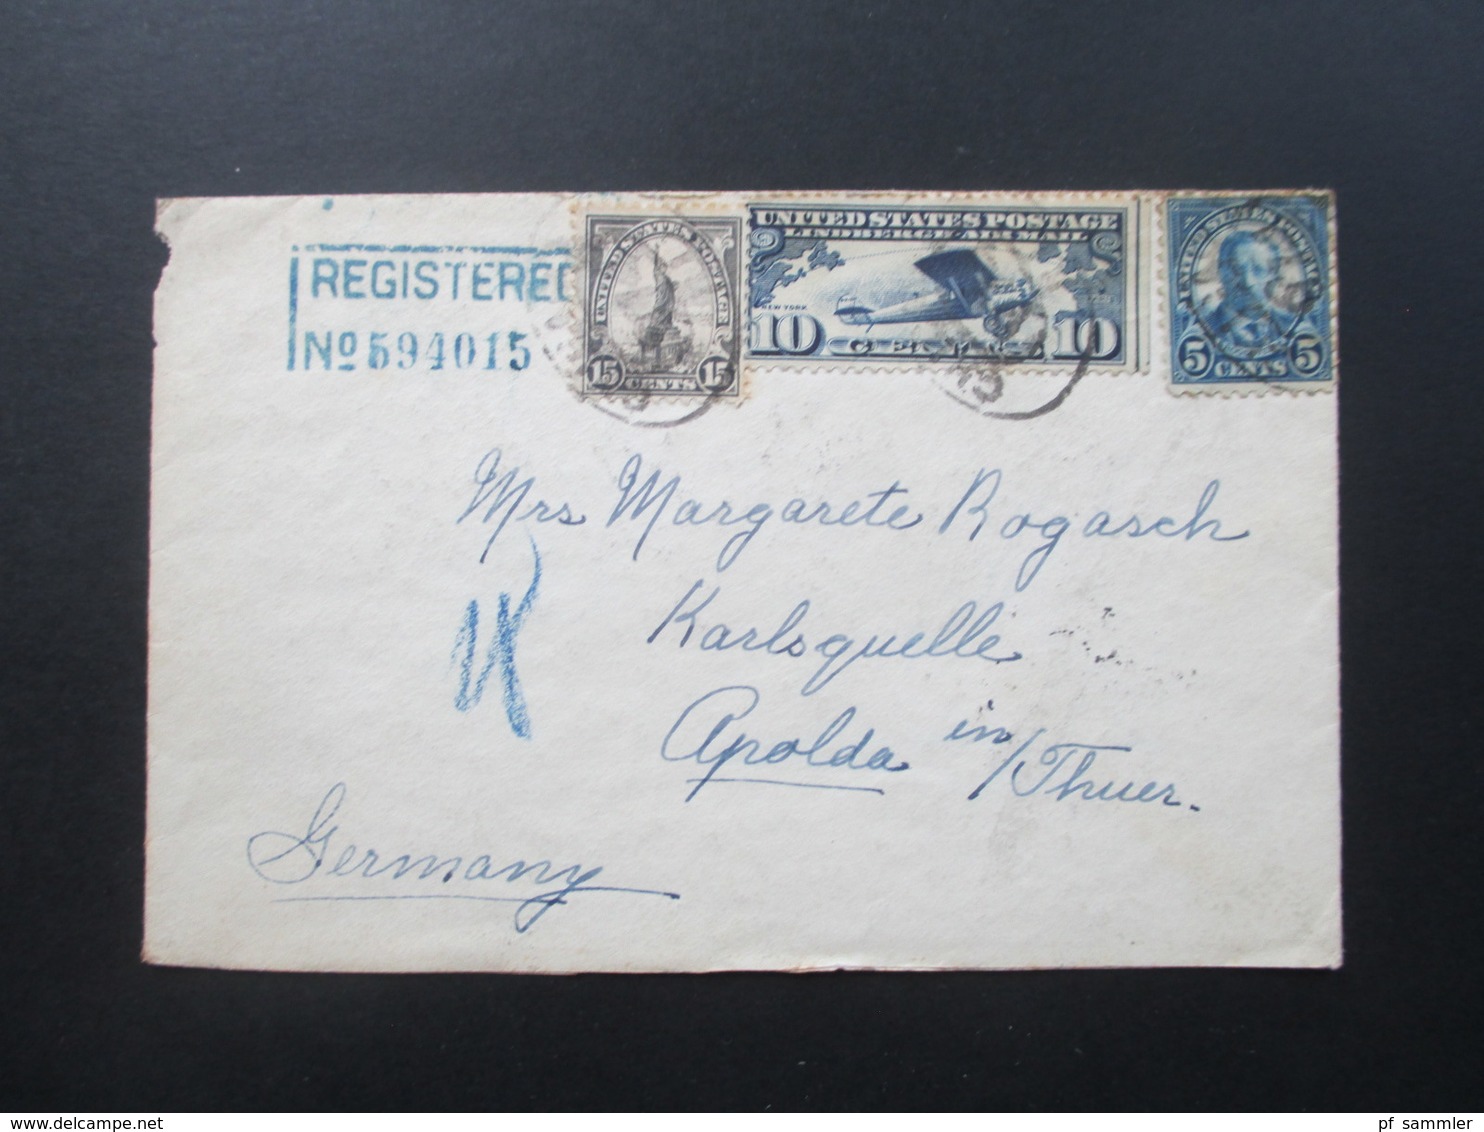 USA 1927 Flugpostmarke Nr. 306 MiF Registered No 594015. 8 Stempel - Lettres & Documents